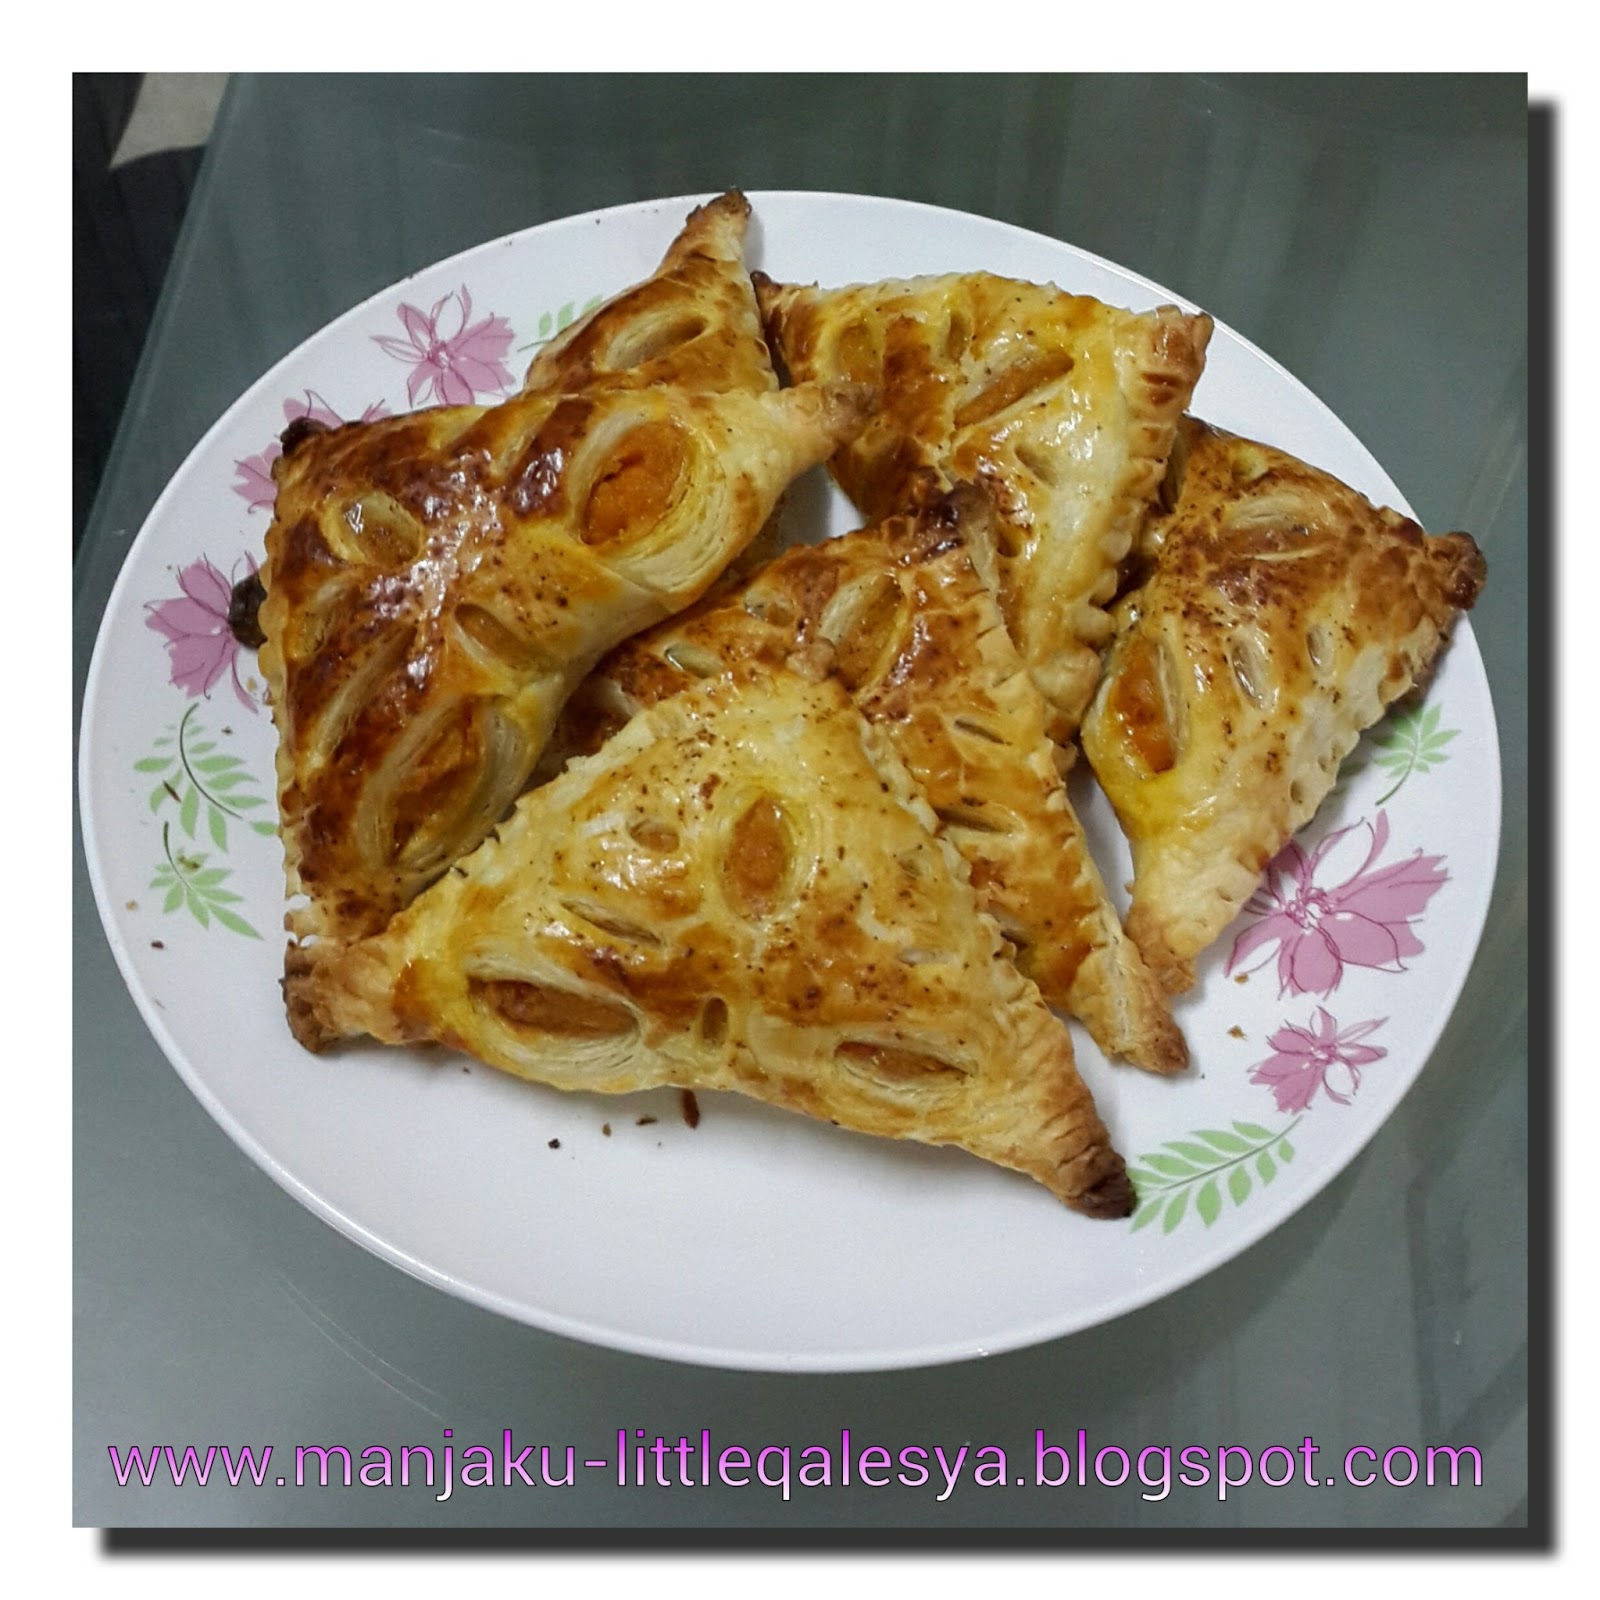 Manjaku Little Qalesya: resepi pastry Chicken puff c: